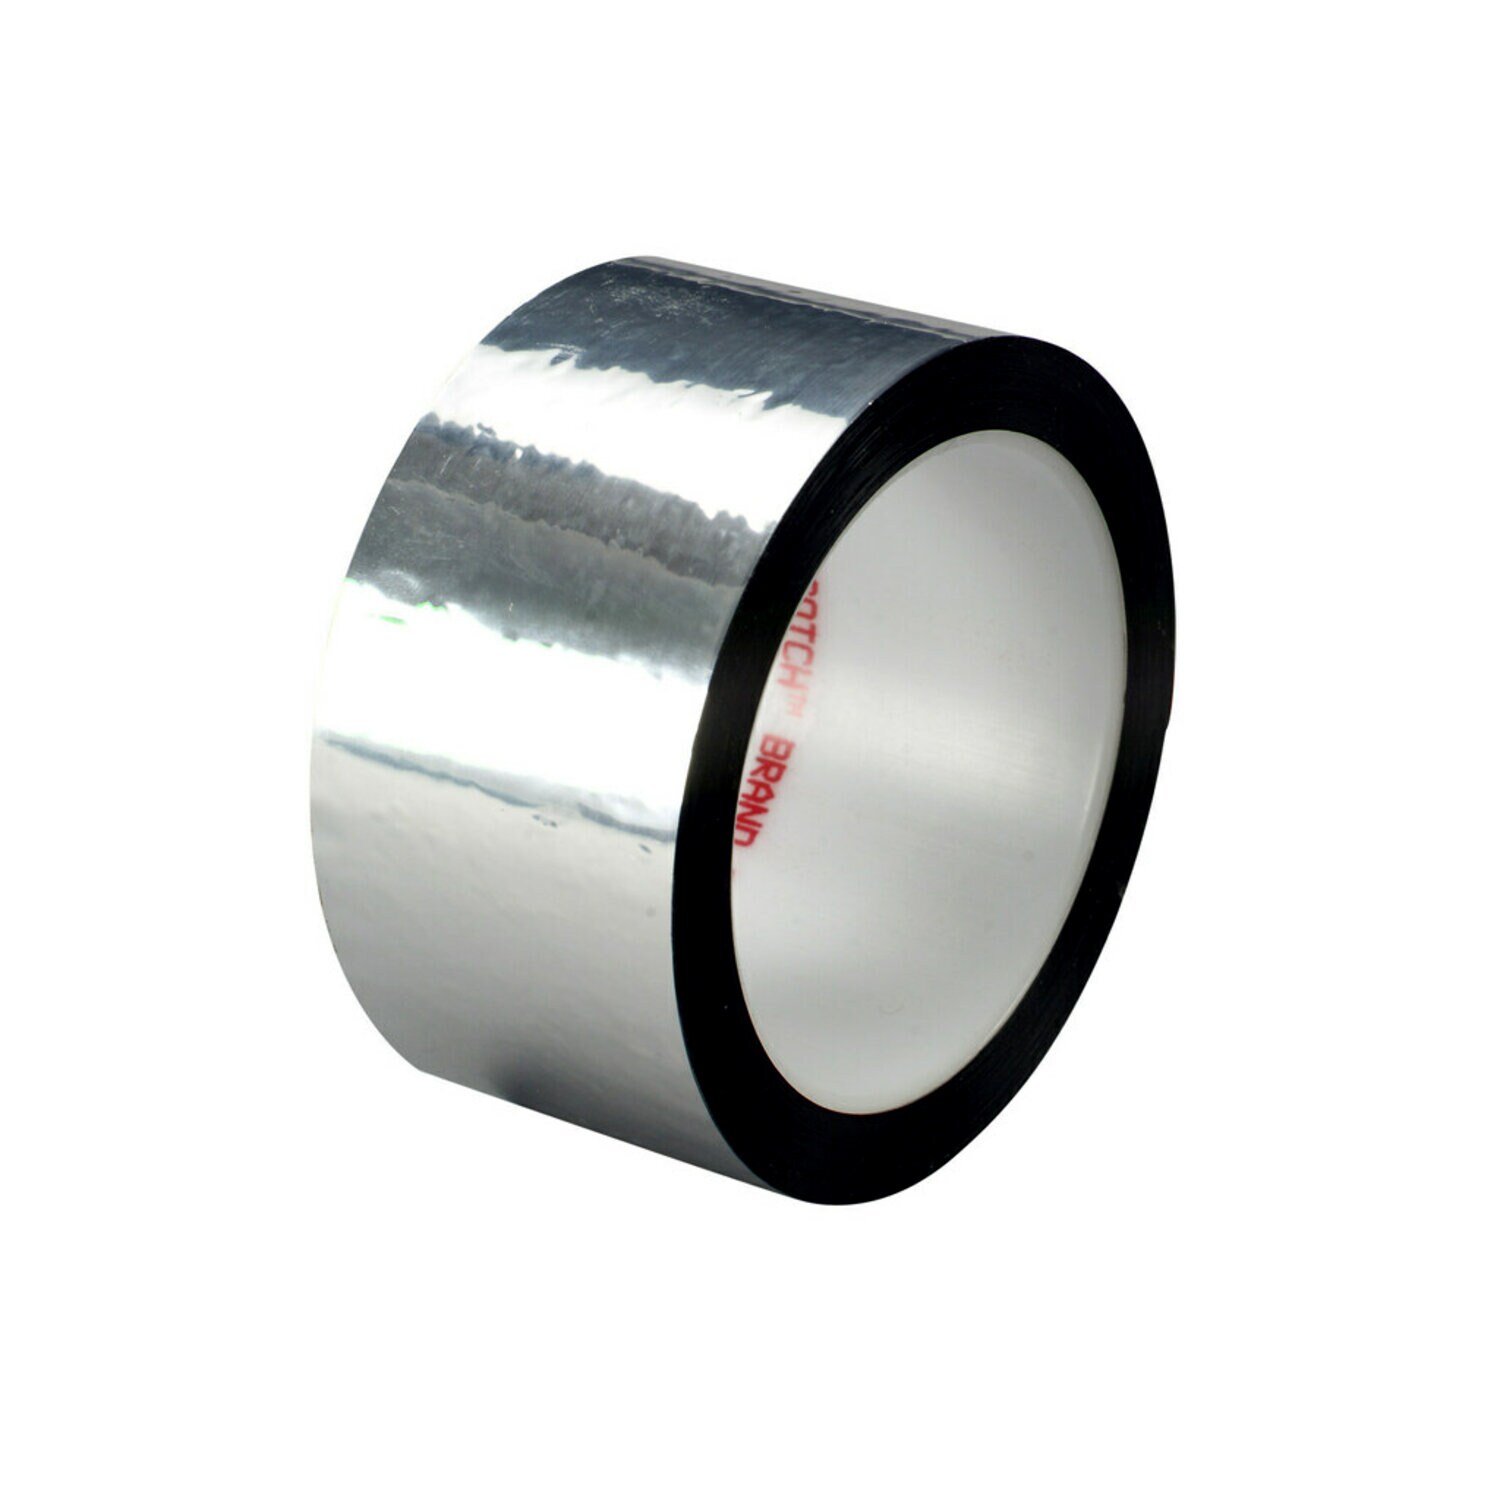 7000047522 - 3M Polyester Film Tape 850, Silver, 1 in x 72 yd, 1.9 mil, 36 rolls per
case